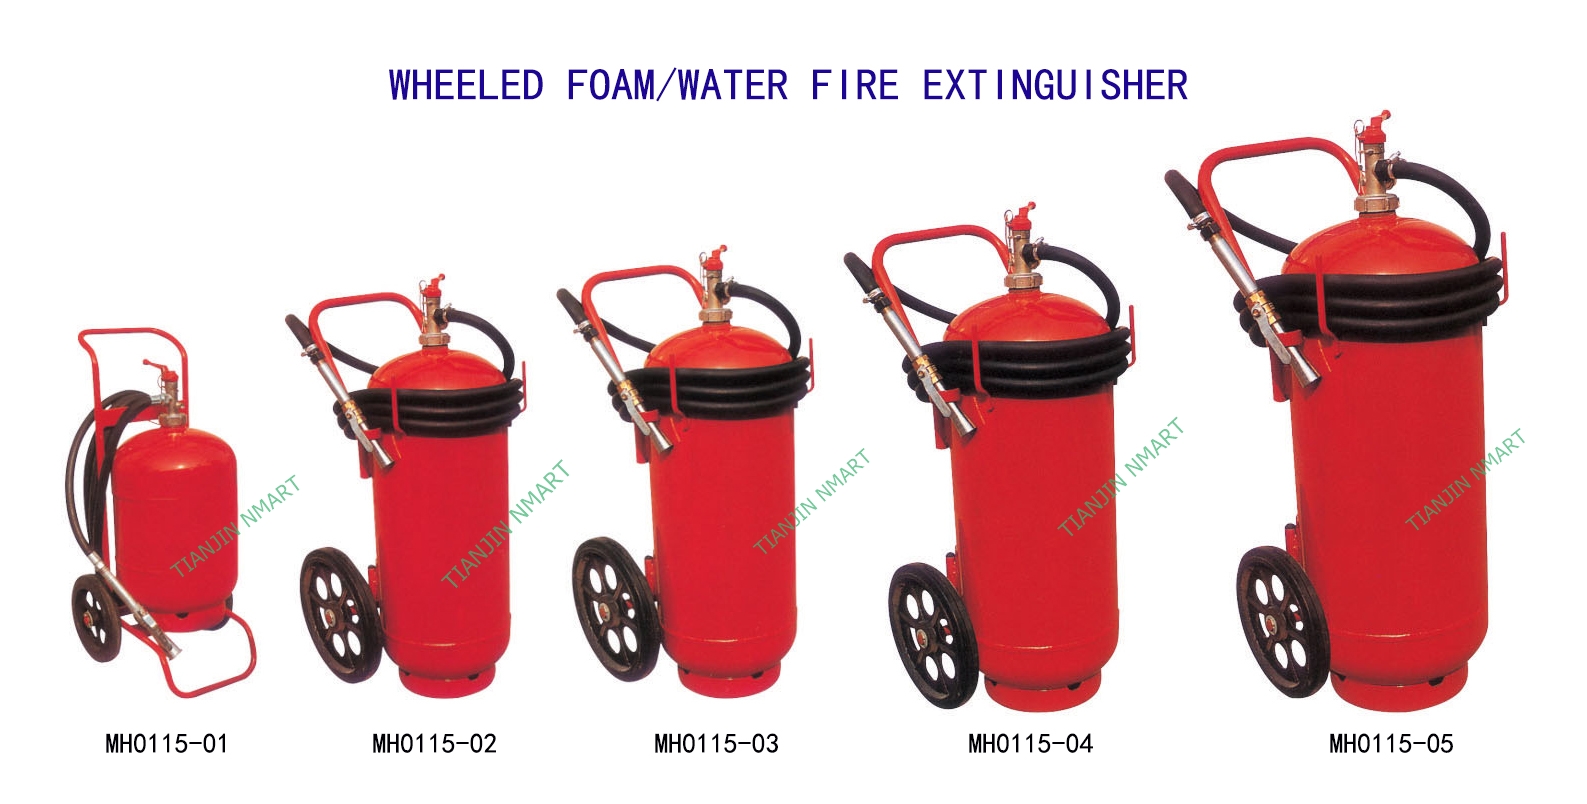 Wheeled Foam/Water Fire Extinguisher